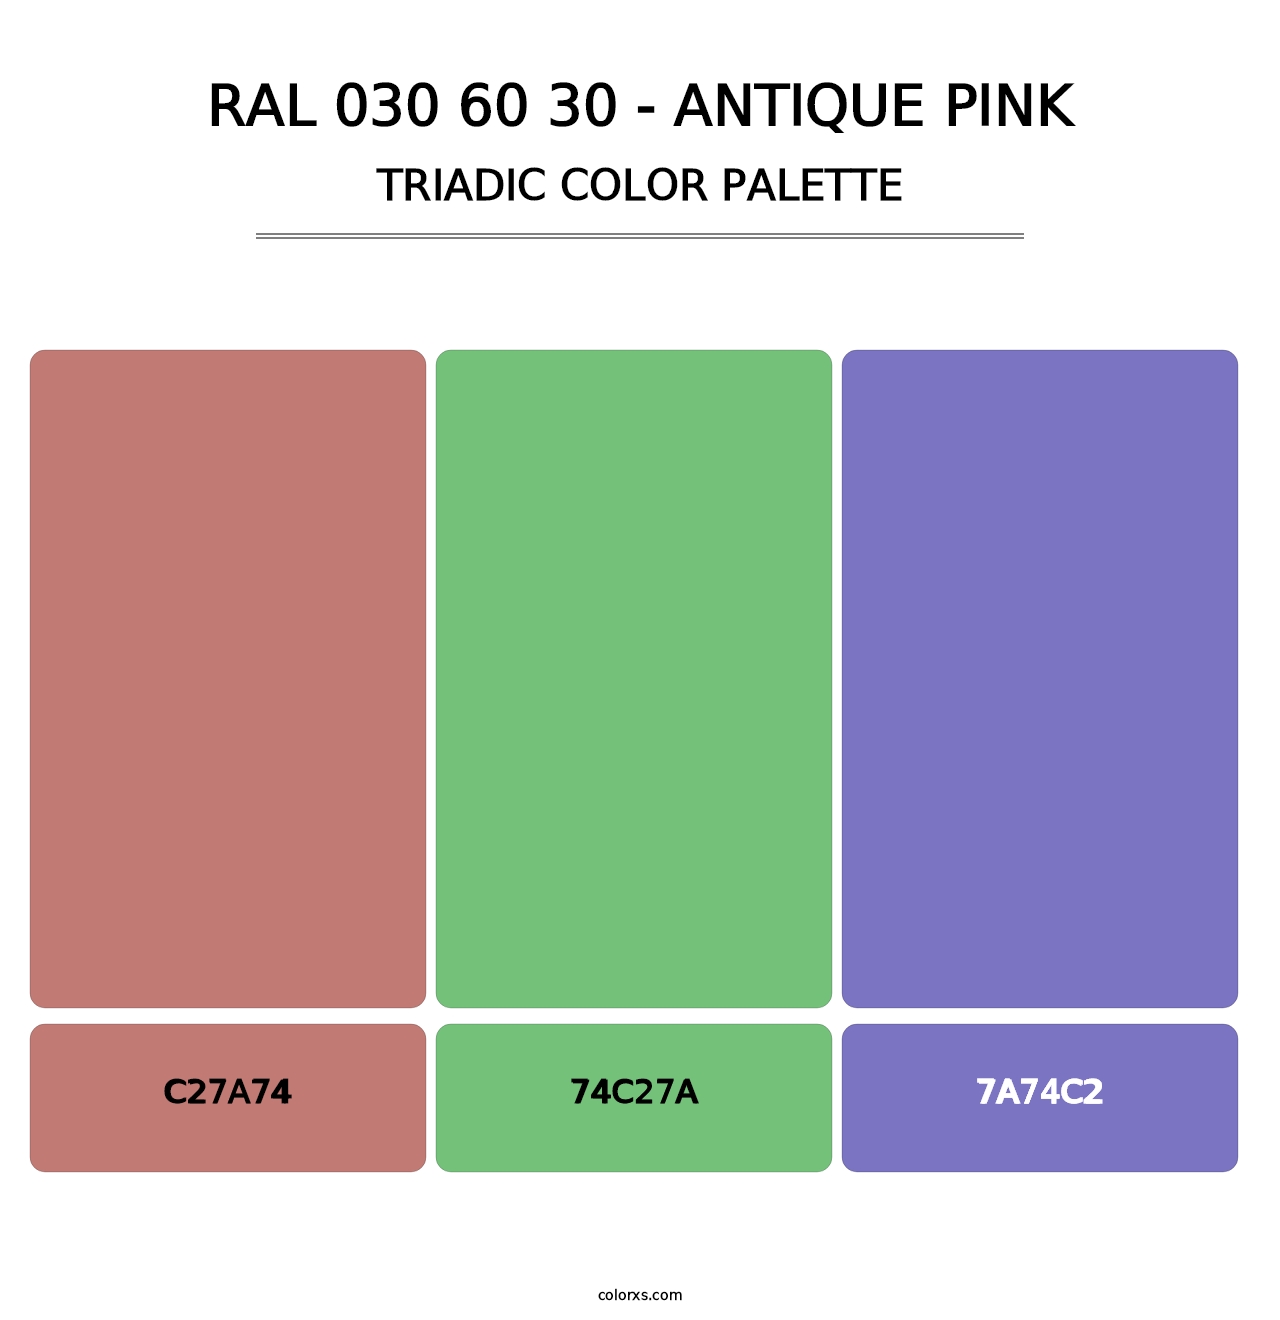 RAL 030 60 30 - Antique Pink - Triadic Color Palette